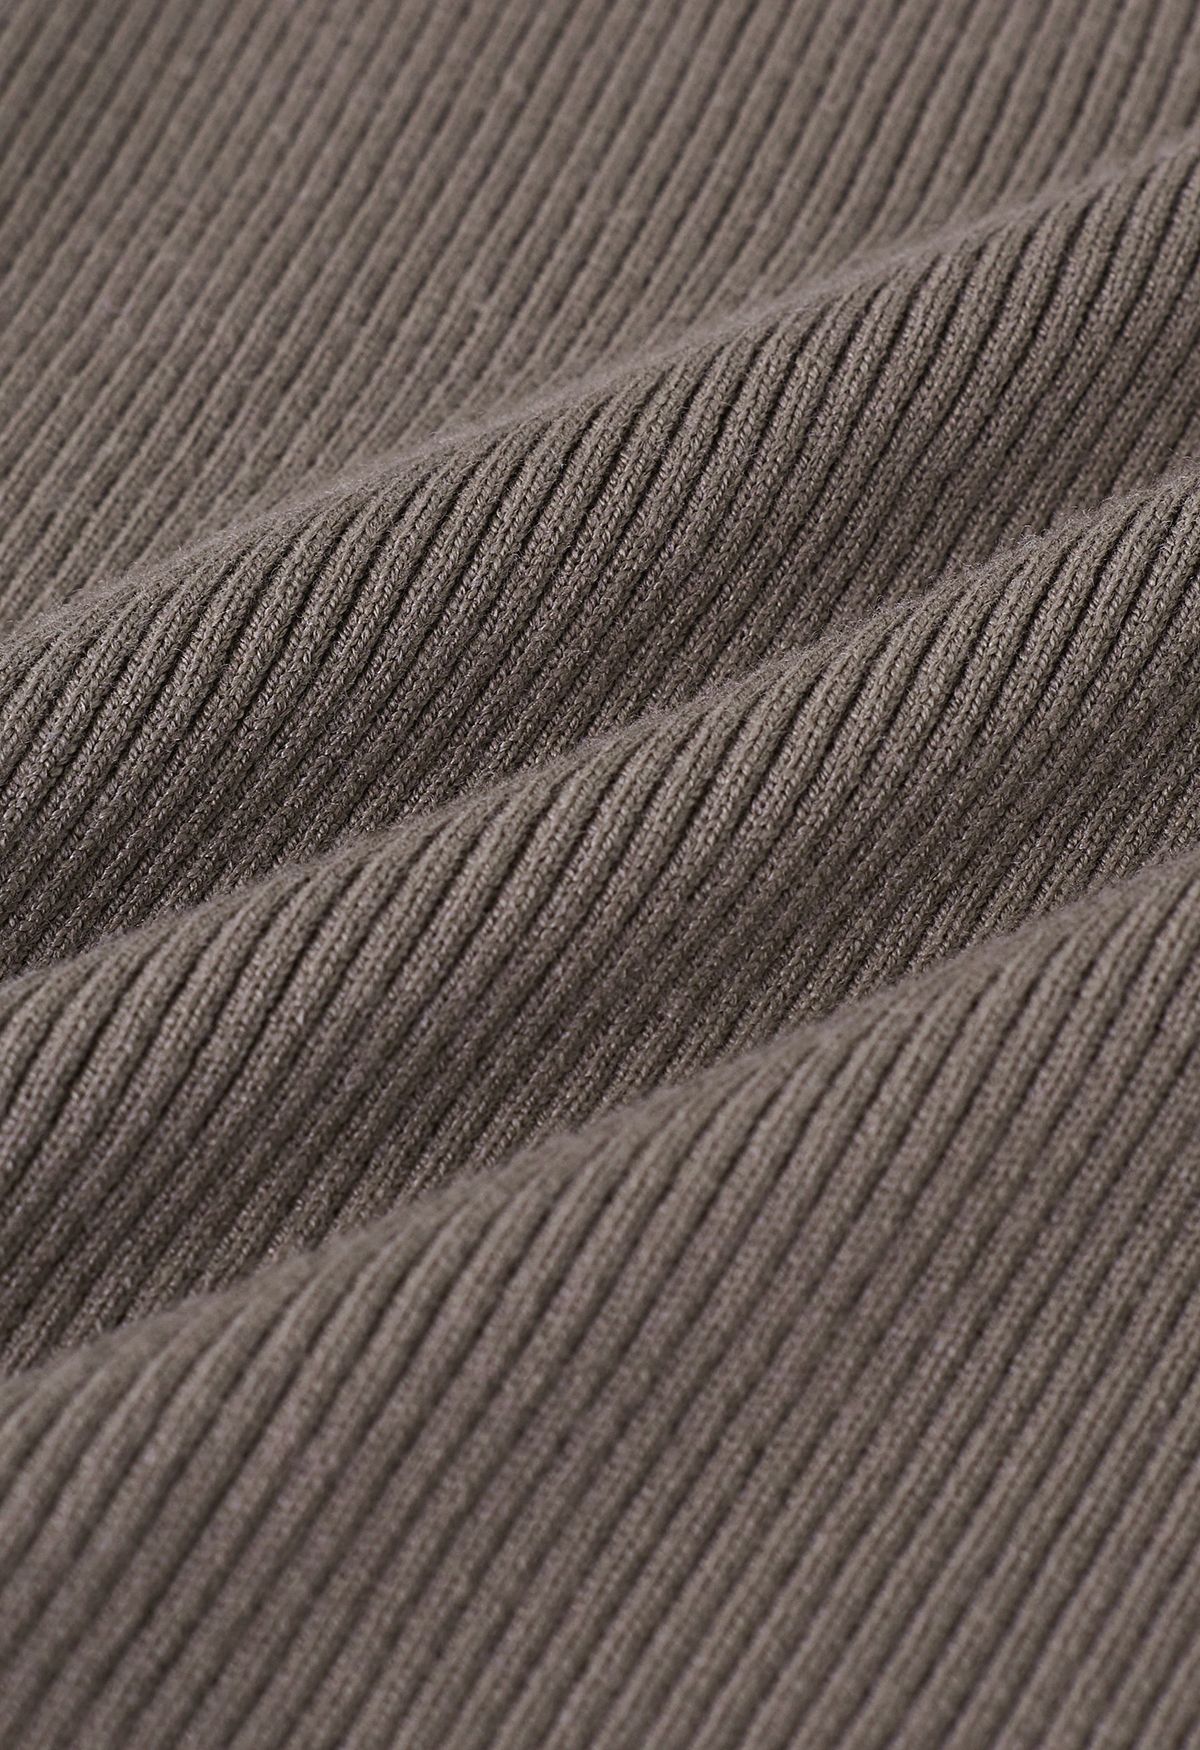 Turtleneck Mesh Overlay Sleeve Knit Top in Brown